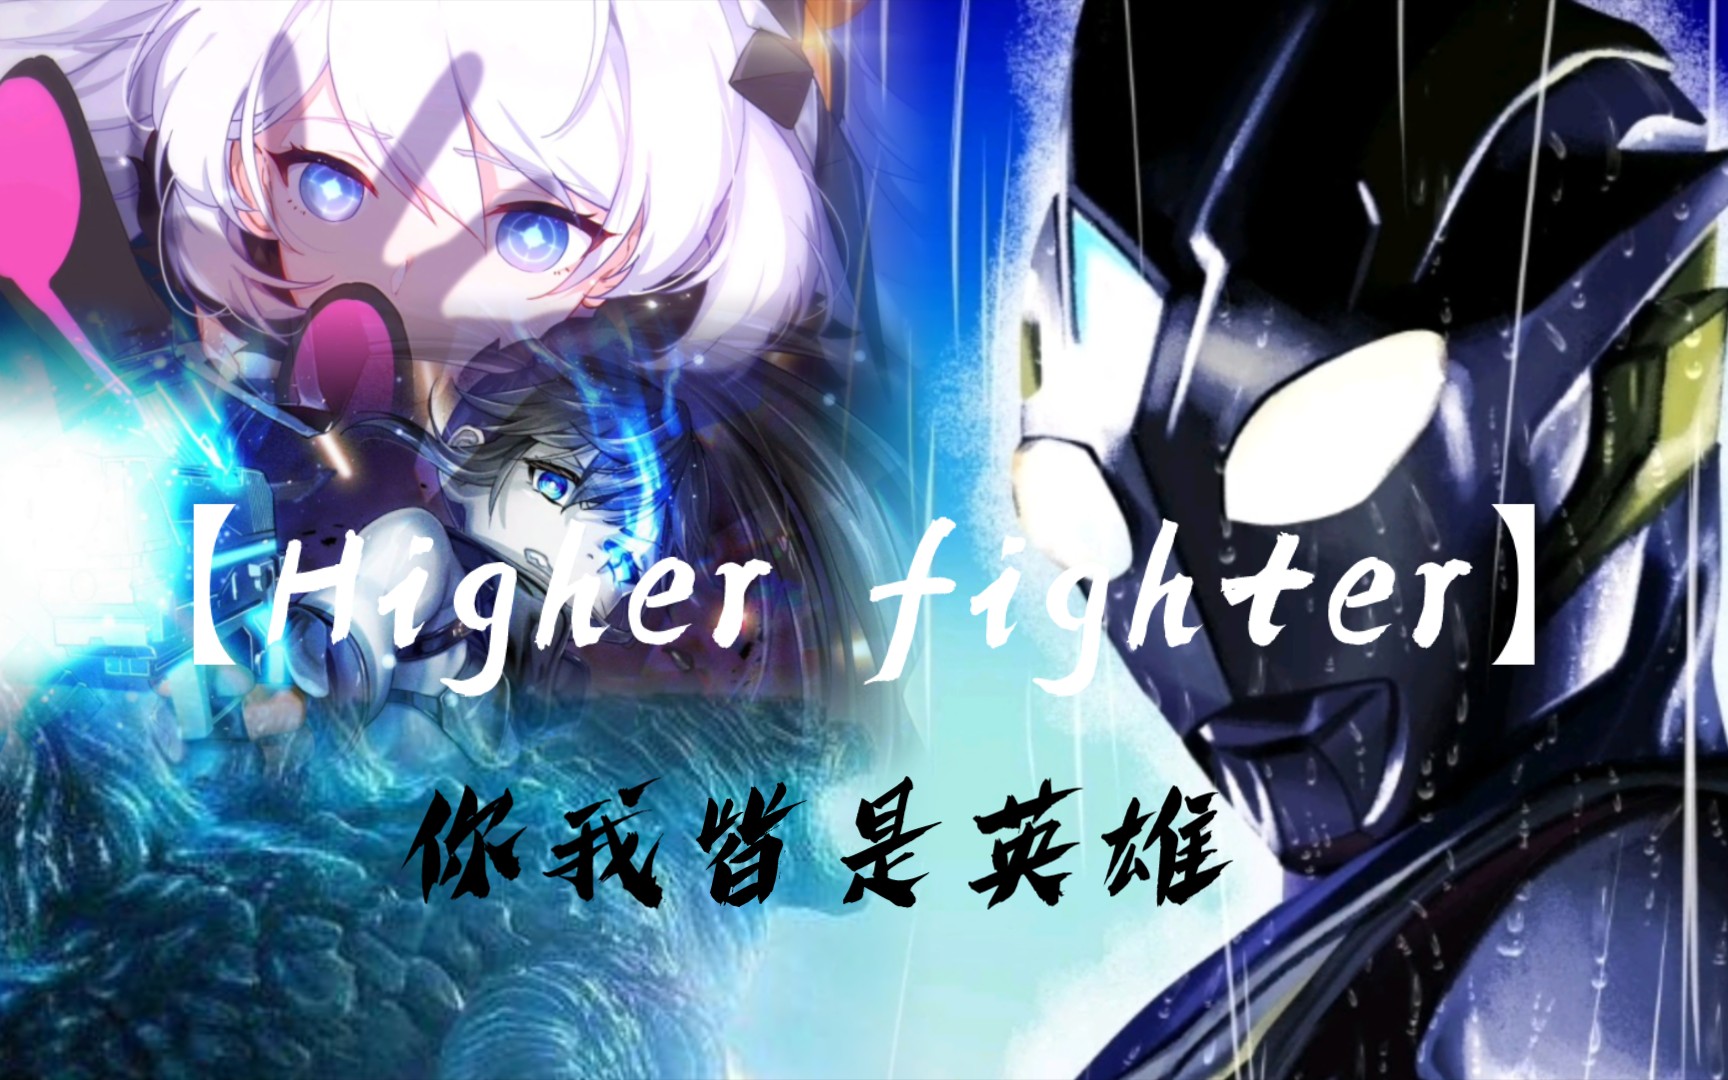 【Higher fighter】——我们皆是英雄